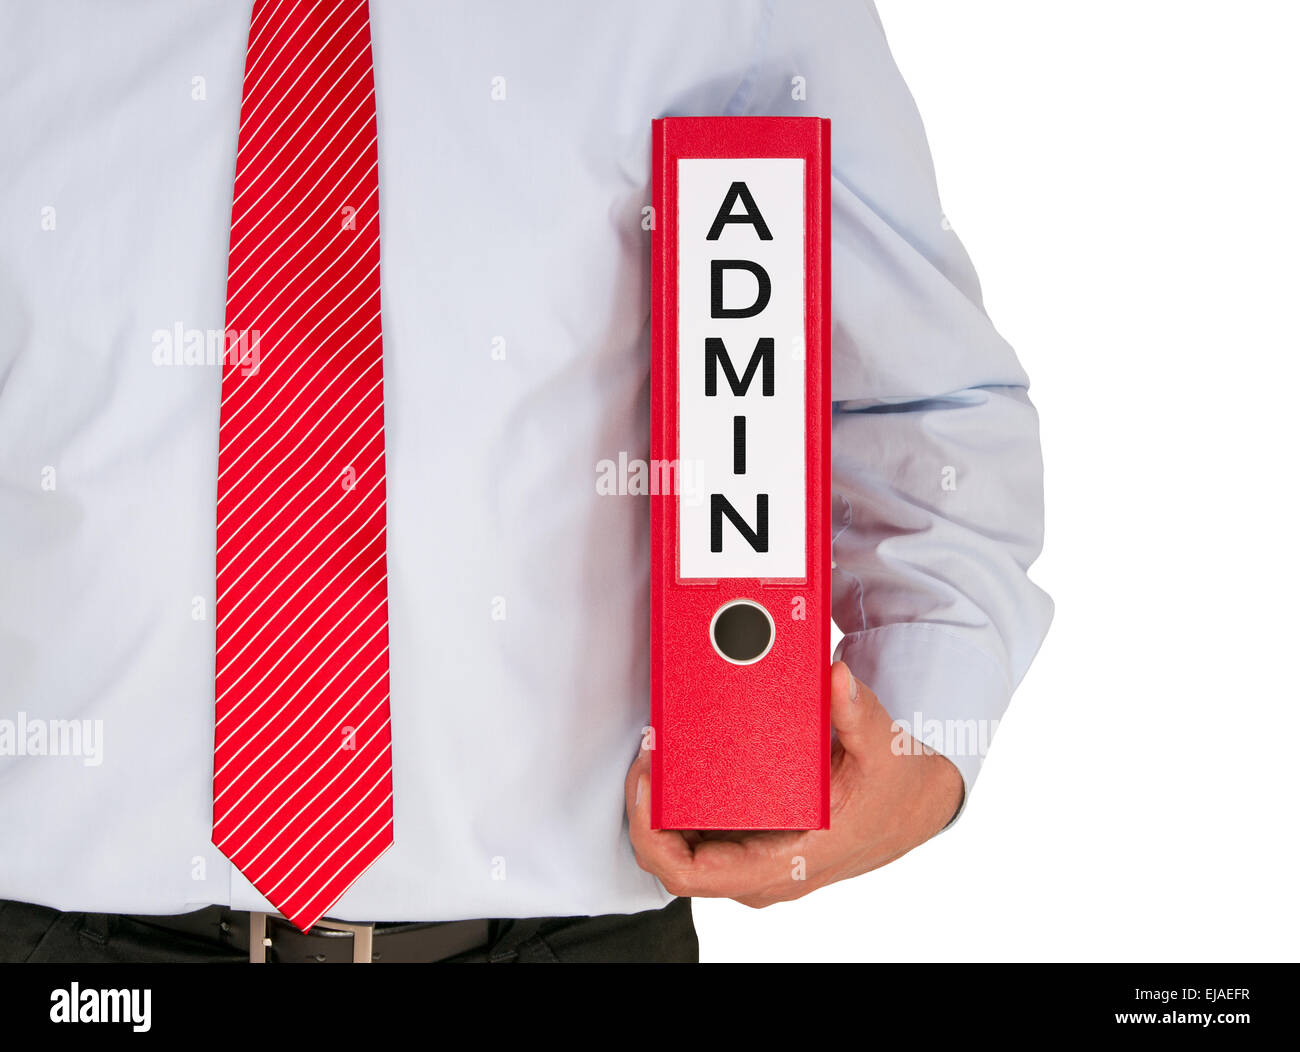 Admin - Administration Stock Photo